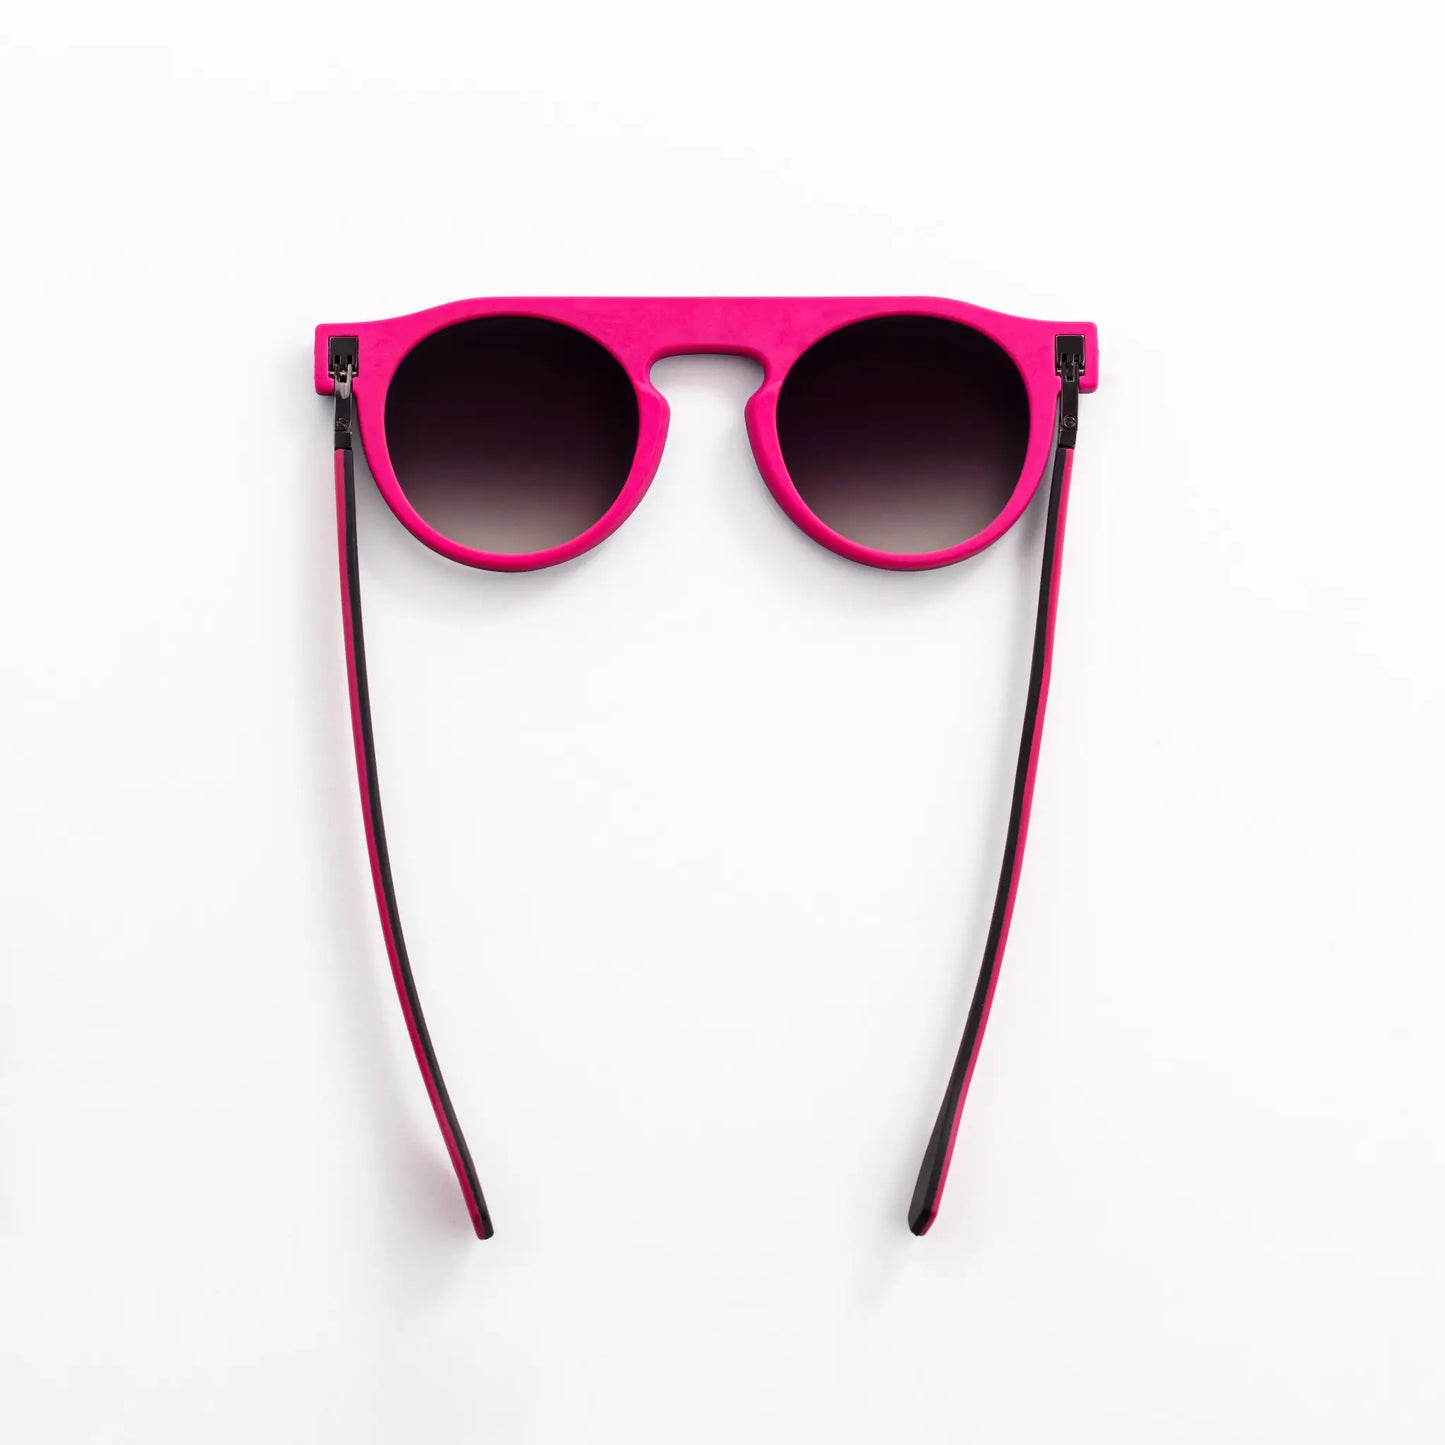 Reverso sunglasses black & pink reversible & ultra light top view